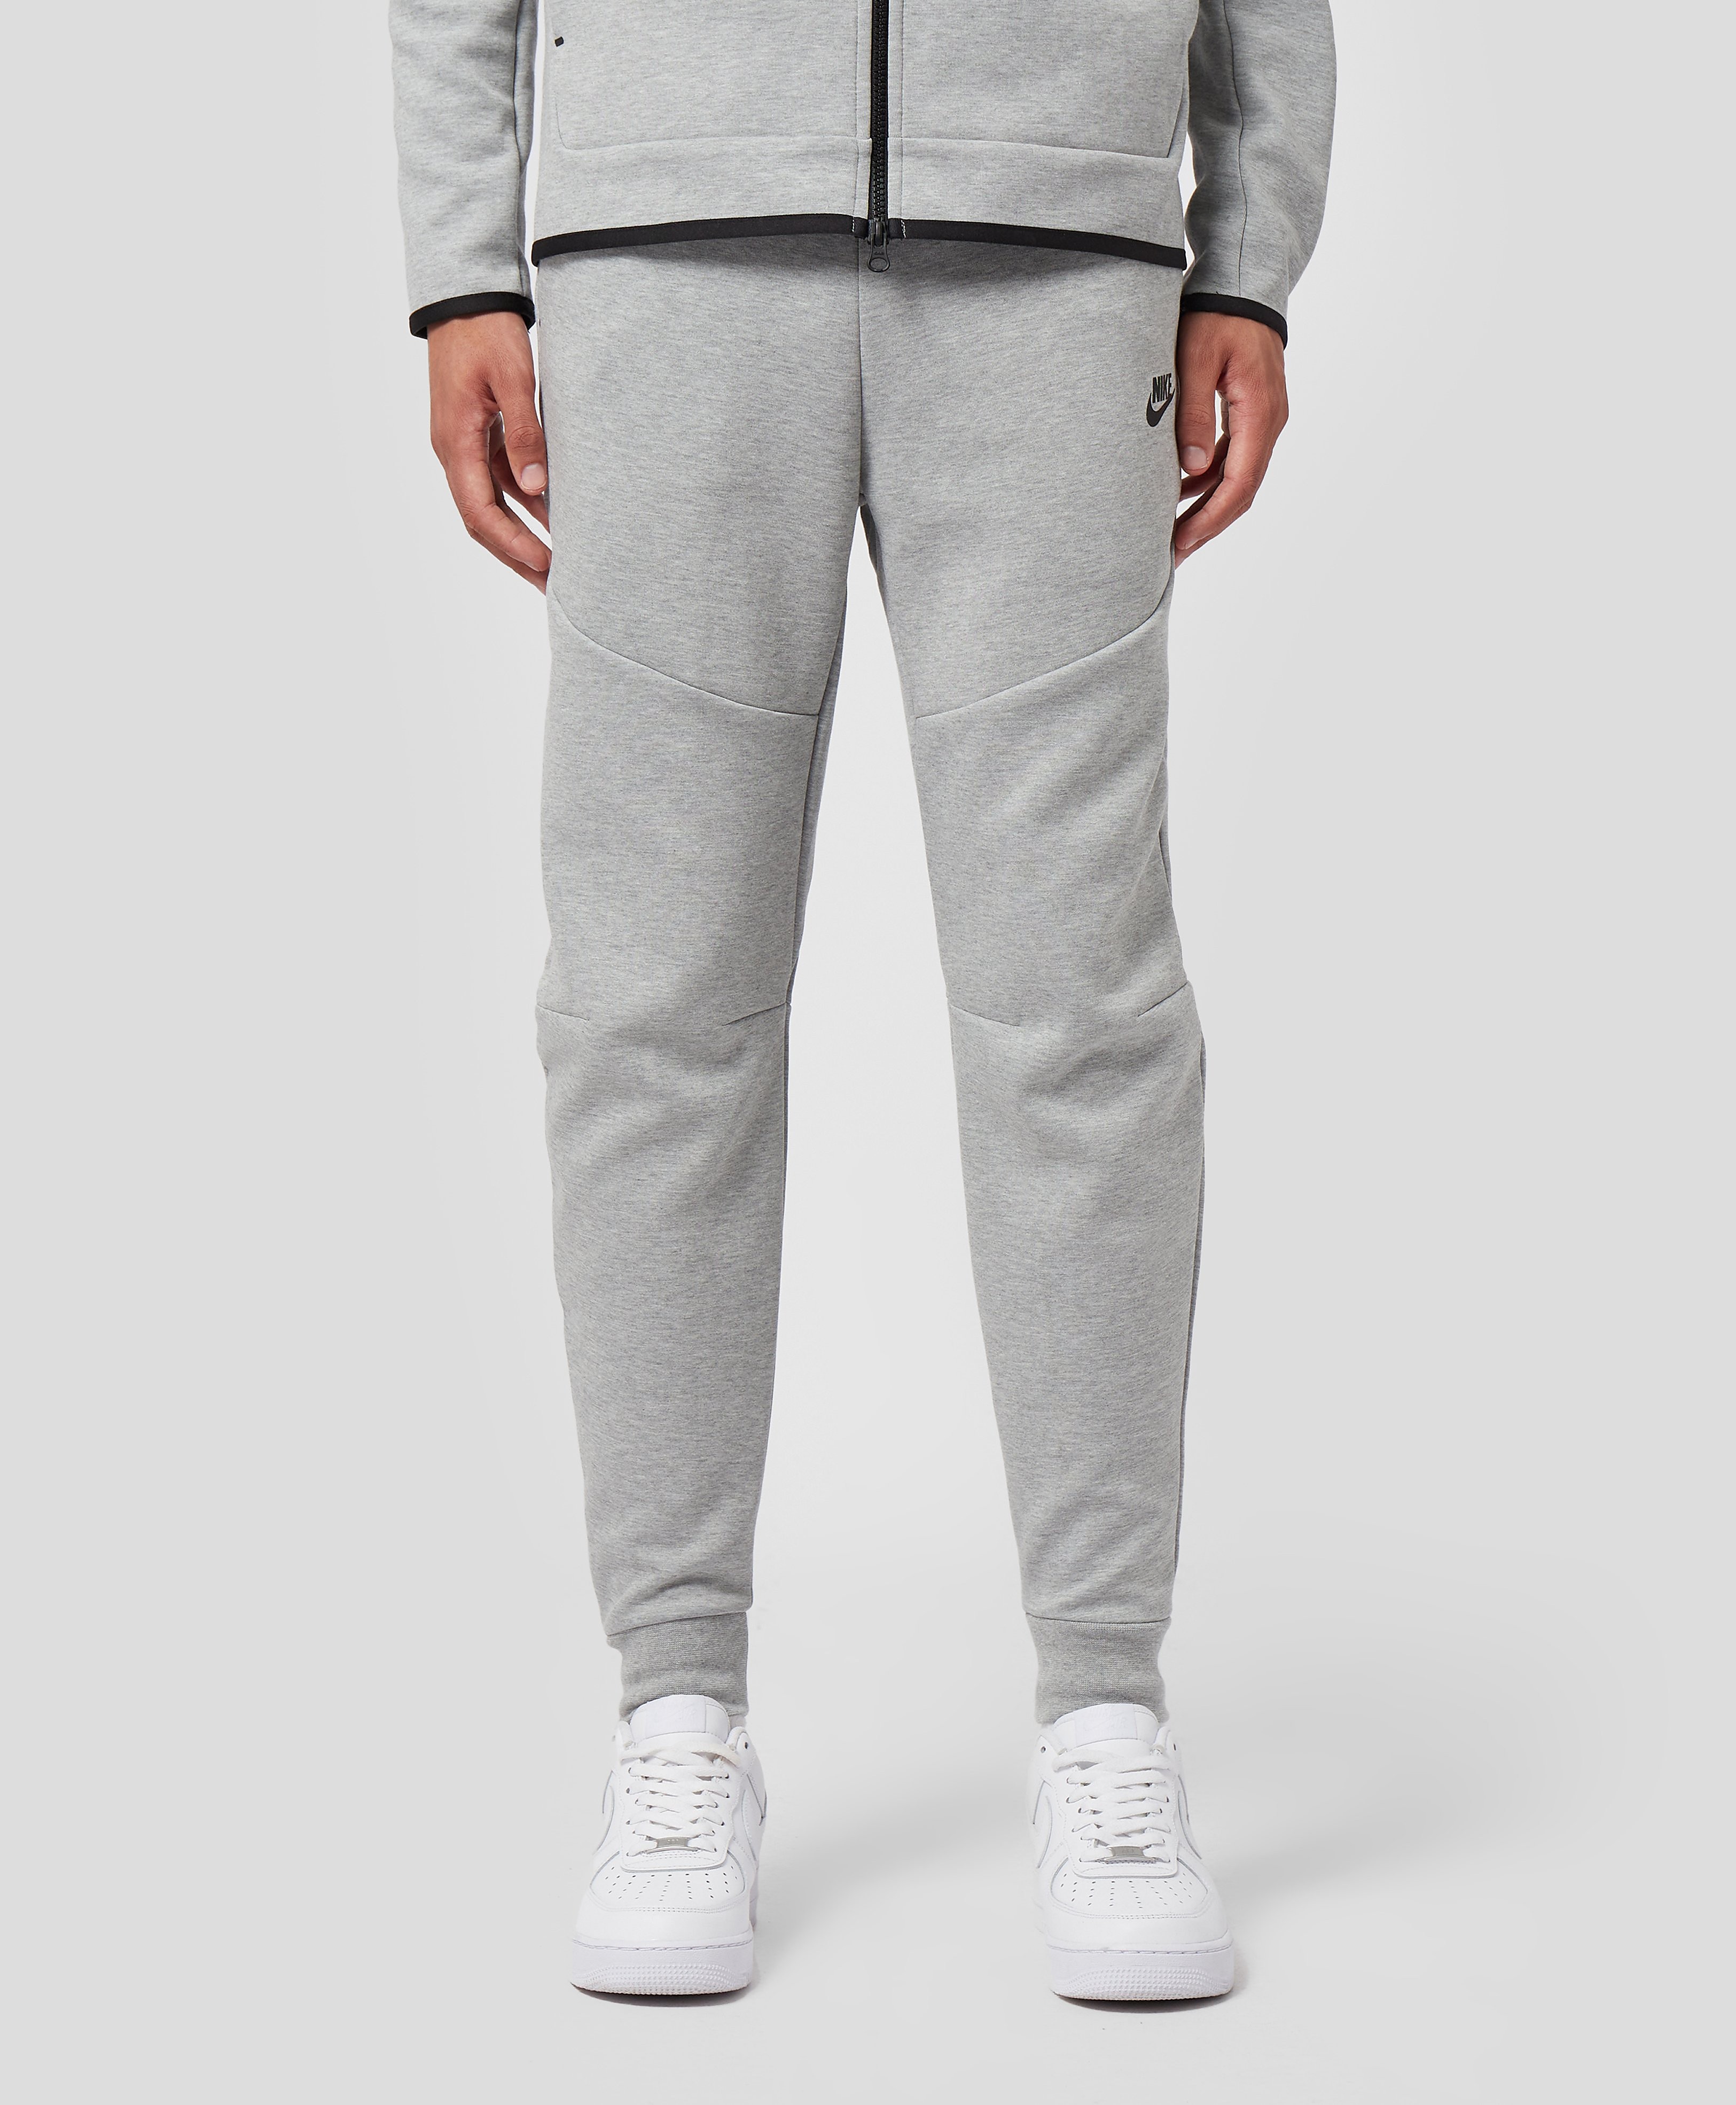 Nike Men's Tech Fleece Joggers - Grey, Grey